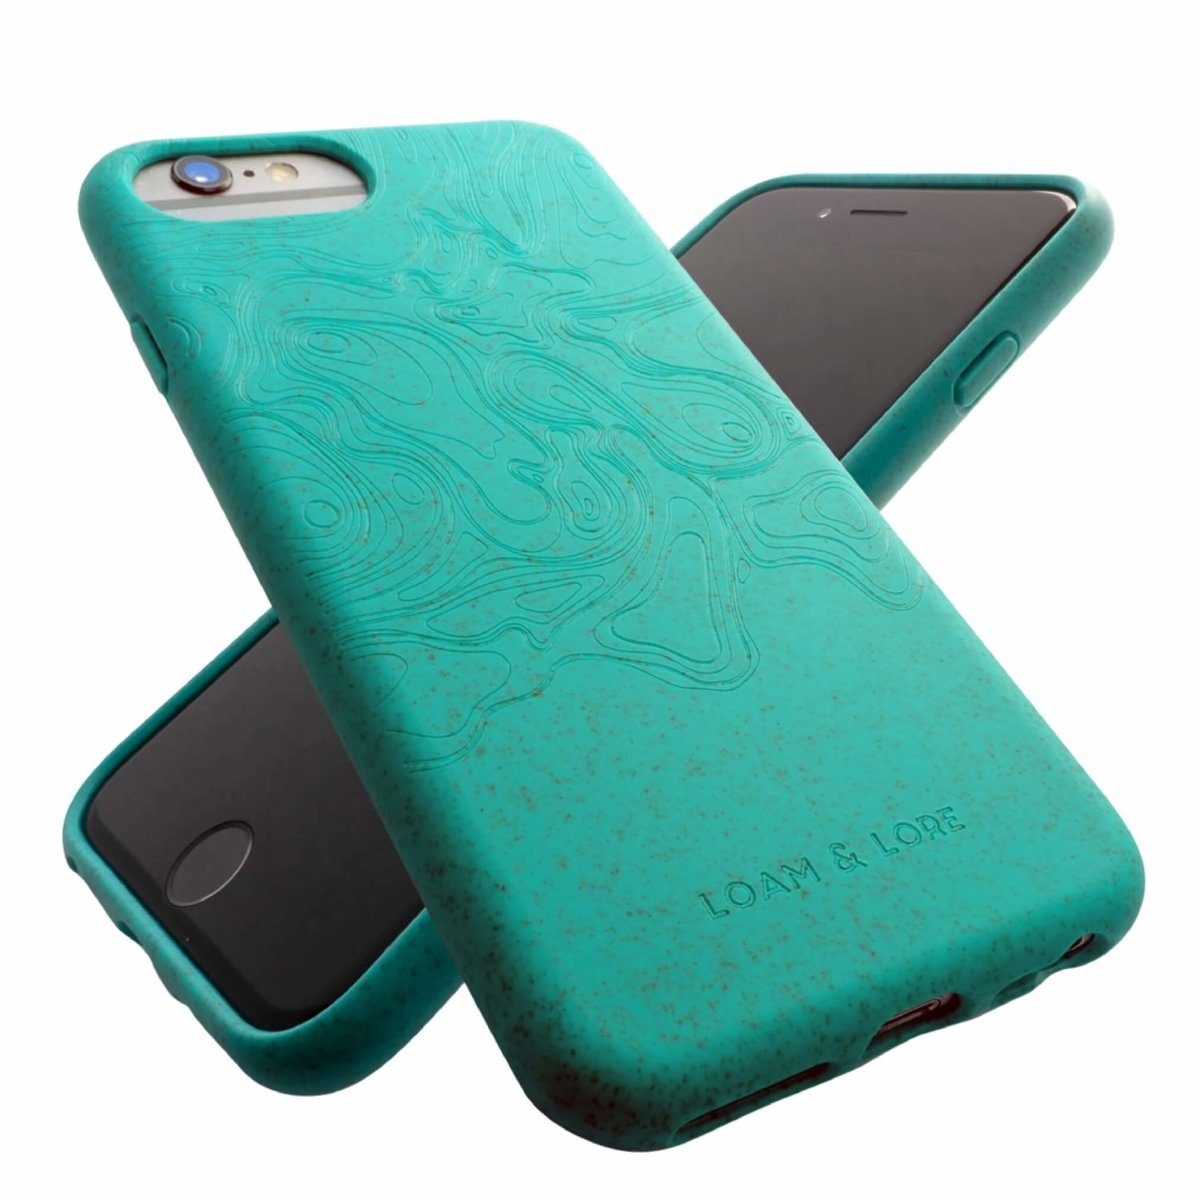 Sale - Biodegradable iPhone SE Case - Fits iPhone SE3/SE2/8/7/6 - Loam & Lore